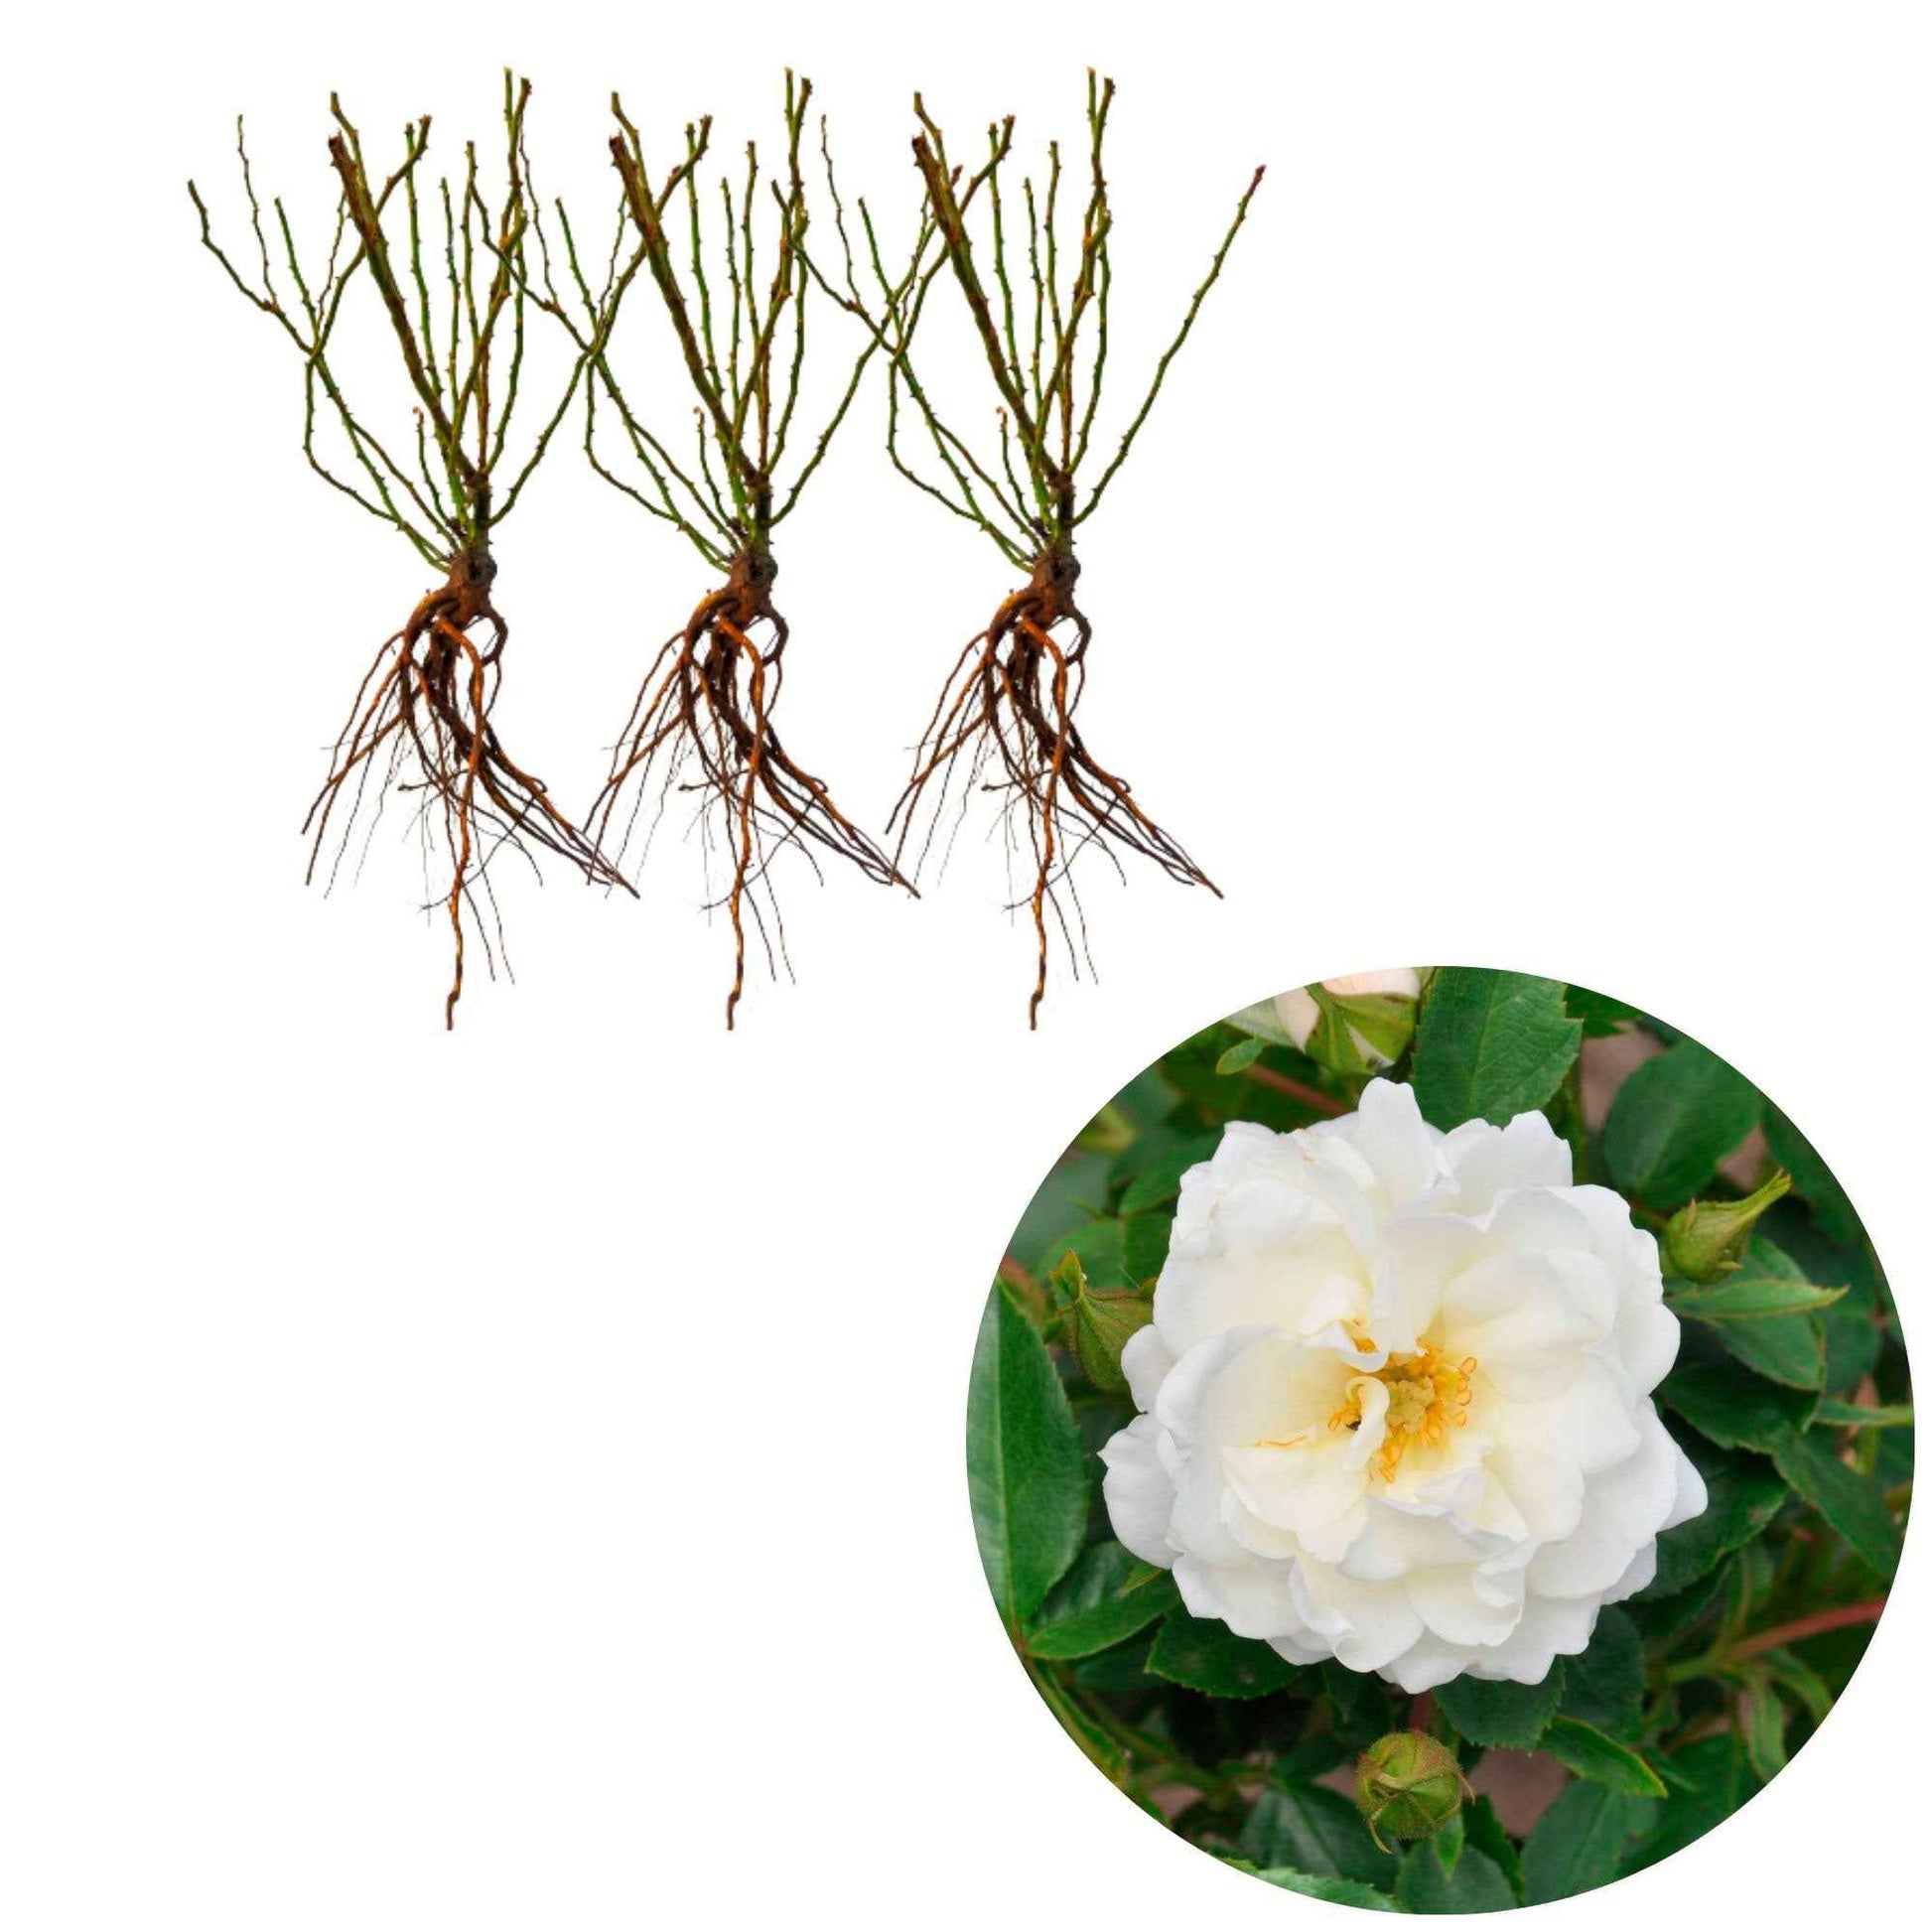 3x Rozen Rosa 'Crystal Mella'® Wit  - Bare rooted - Winterhard - Plantsoort